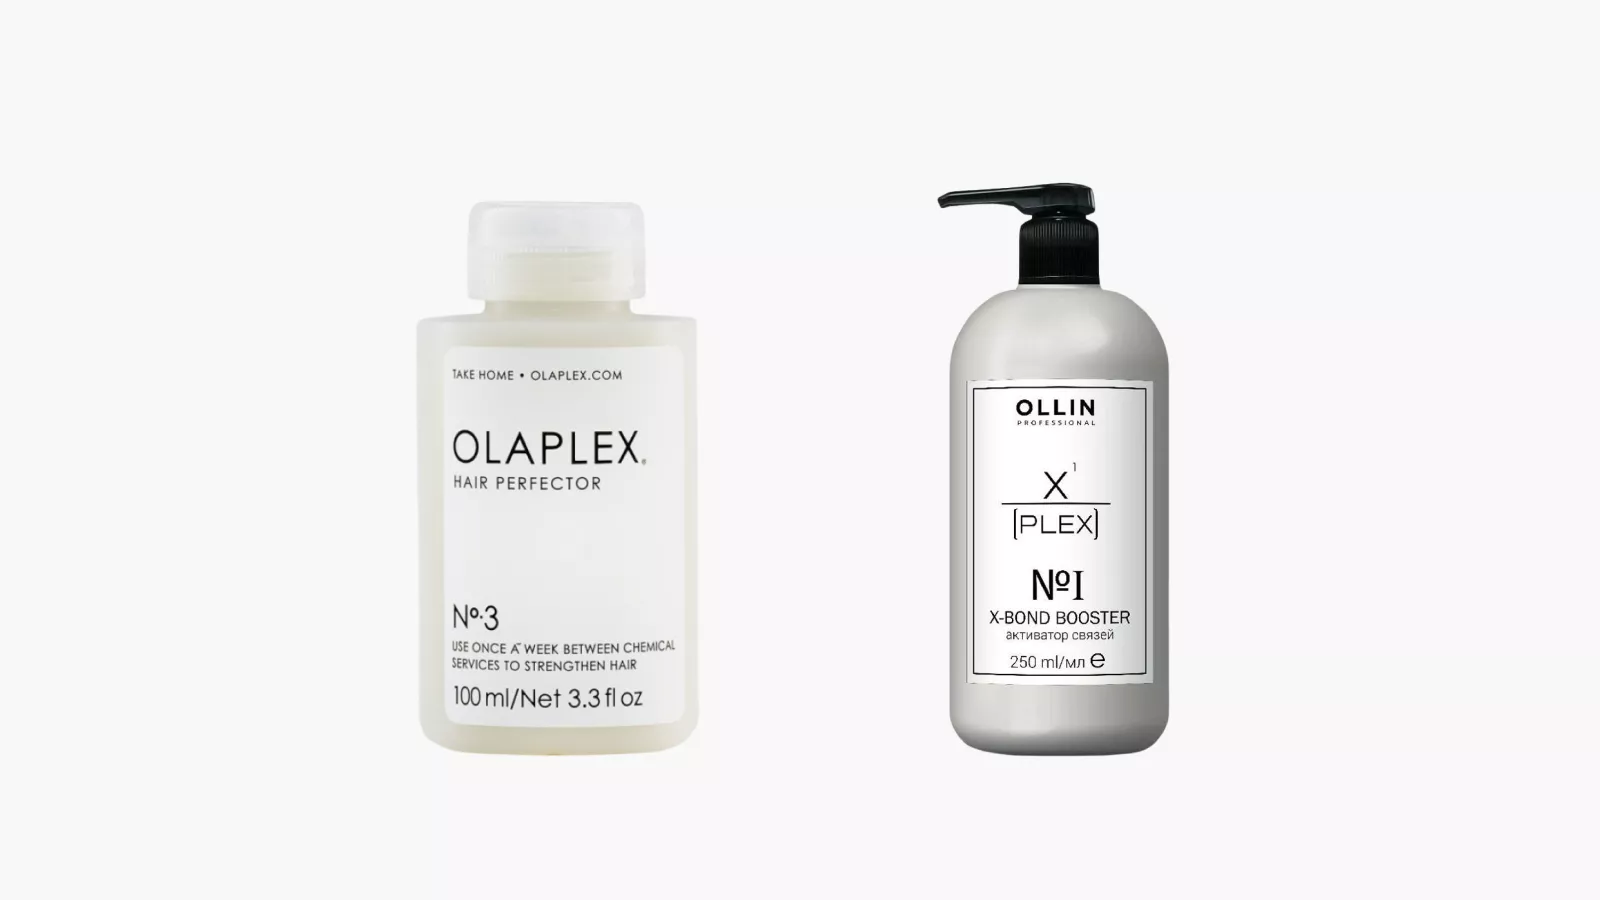 <p>Слева: восстанавливающее средство для волос Hair Perfector, Olaplex</p>

<p>Справа: восстанавливающее средство для волос X Plex, Ollin Professional</p>